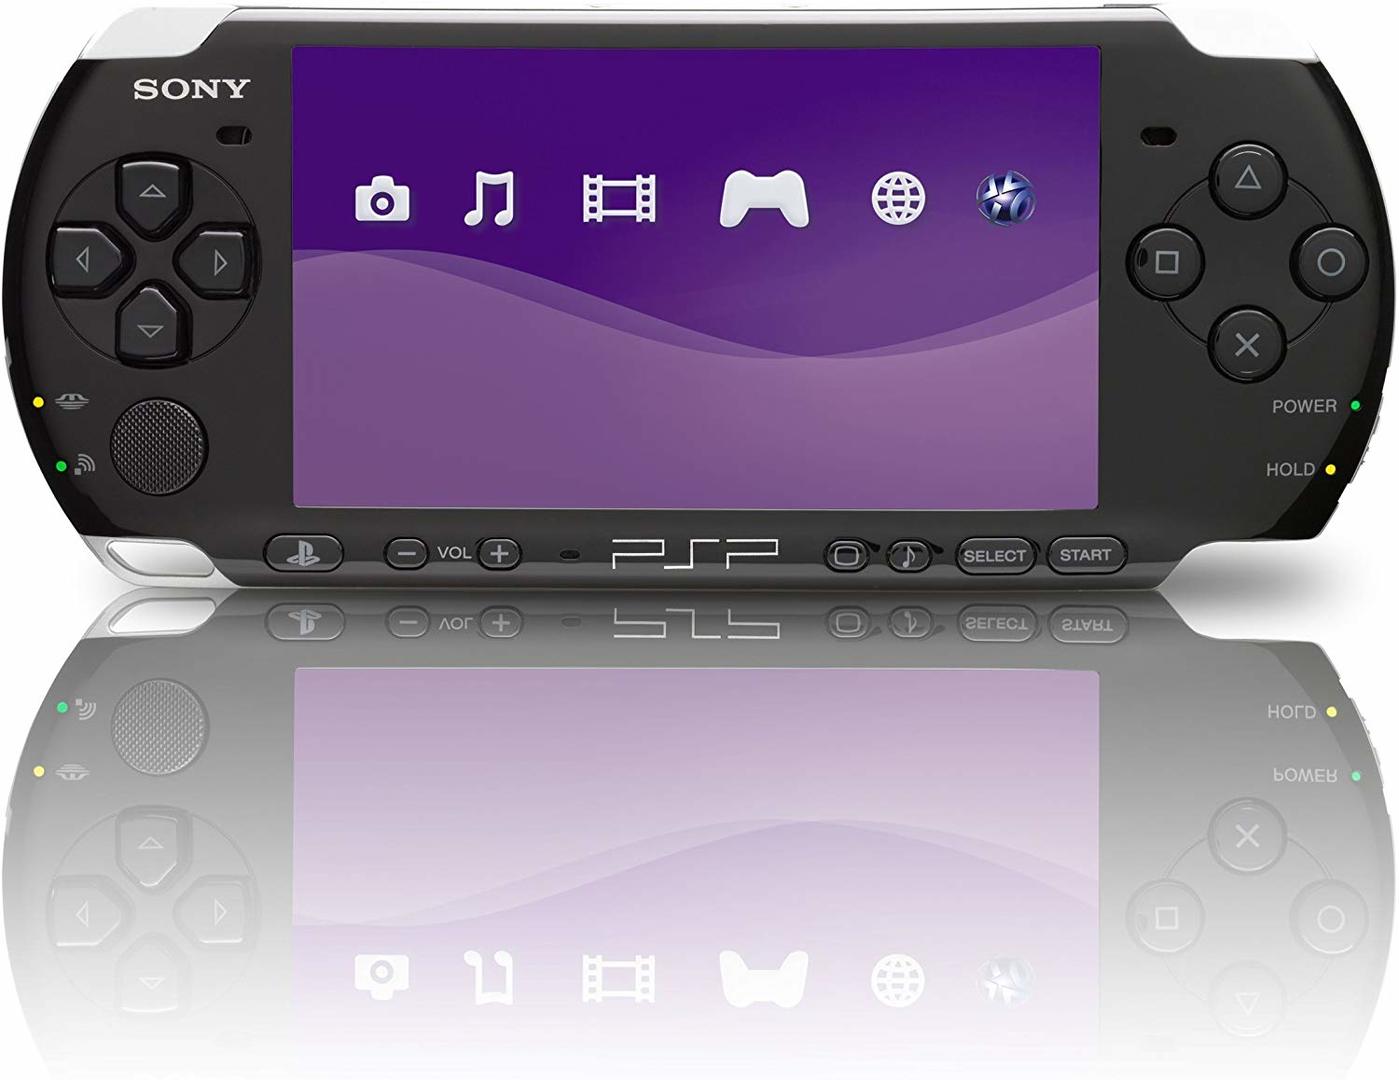   PlayStation Portable (PSP)